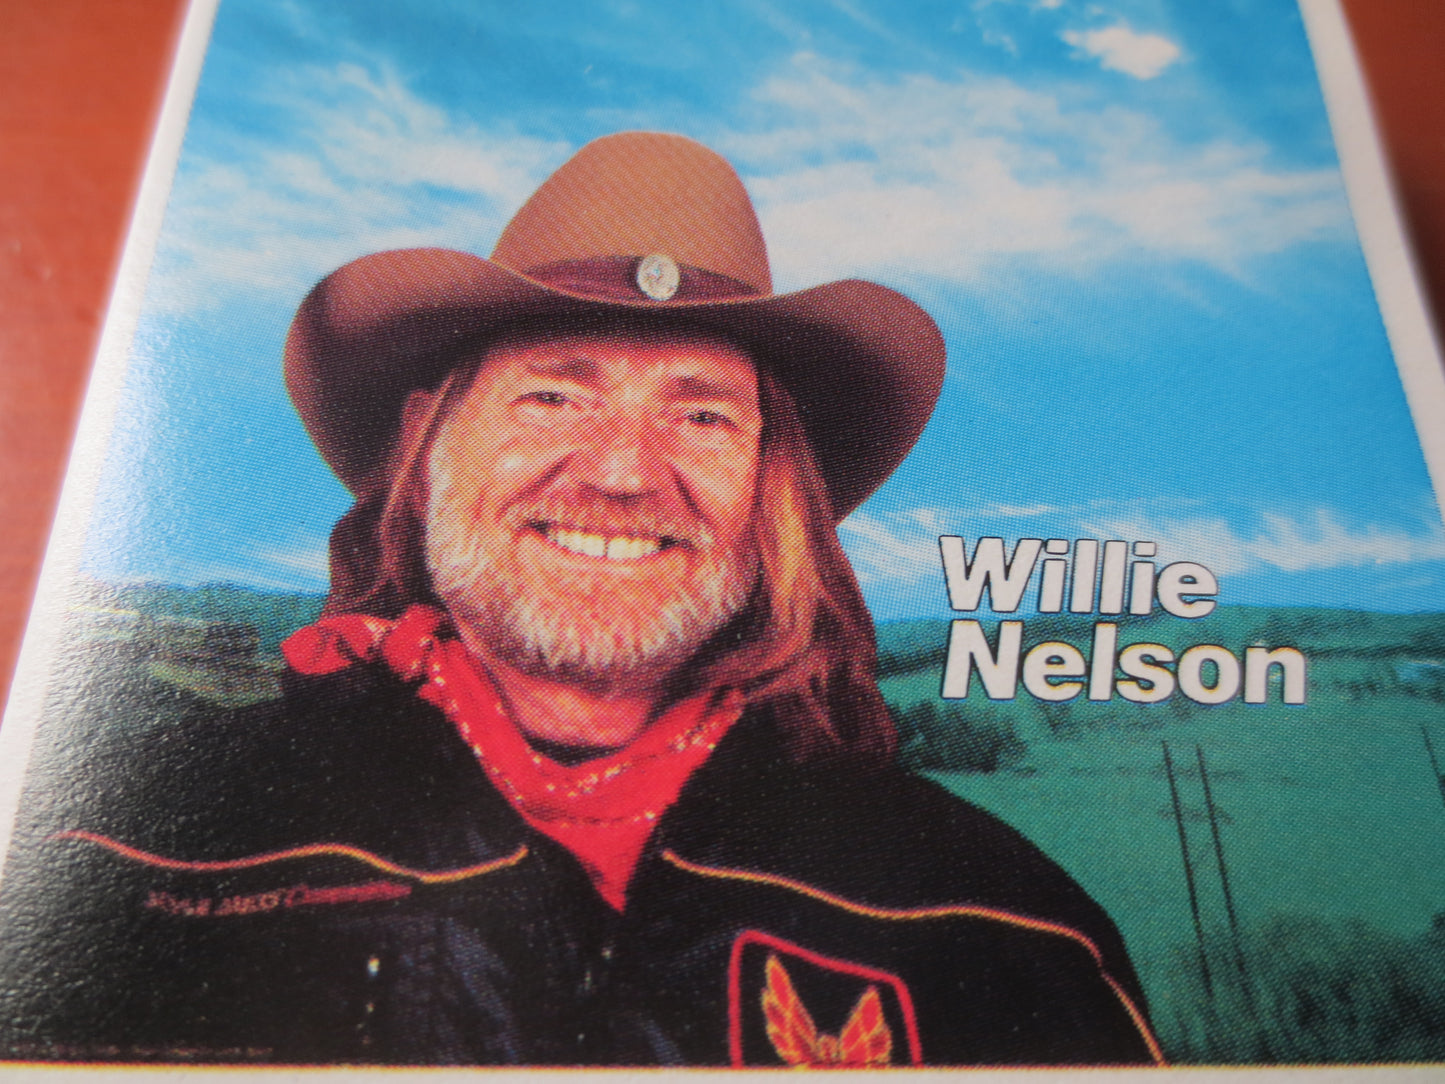 WILLIE NELSON, His Very BEST, Willie Nelson Tape, Willie Nelson Album, Tape Cassette, Tape, Country Cassette, Cassette Music